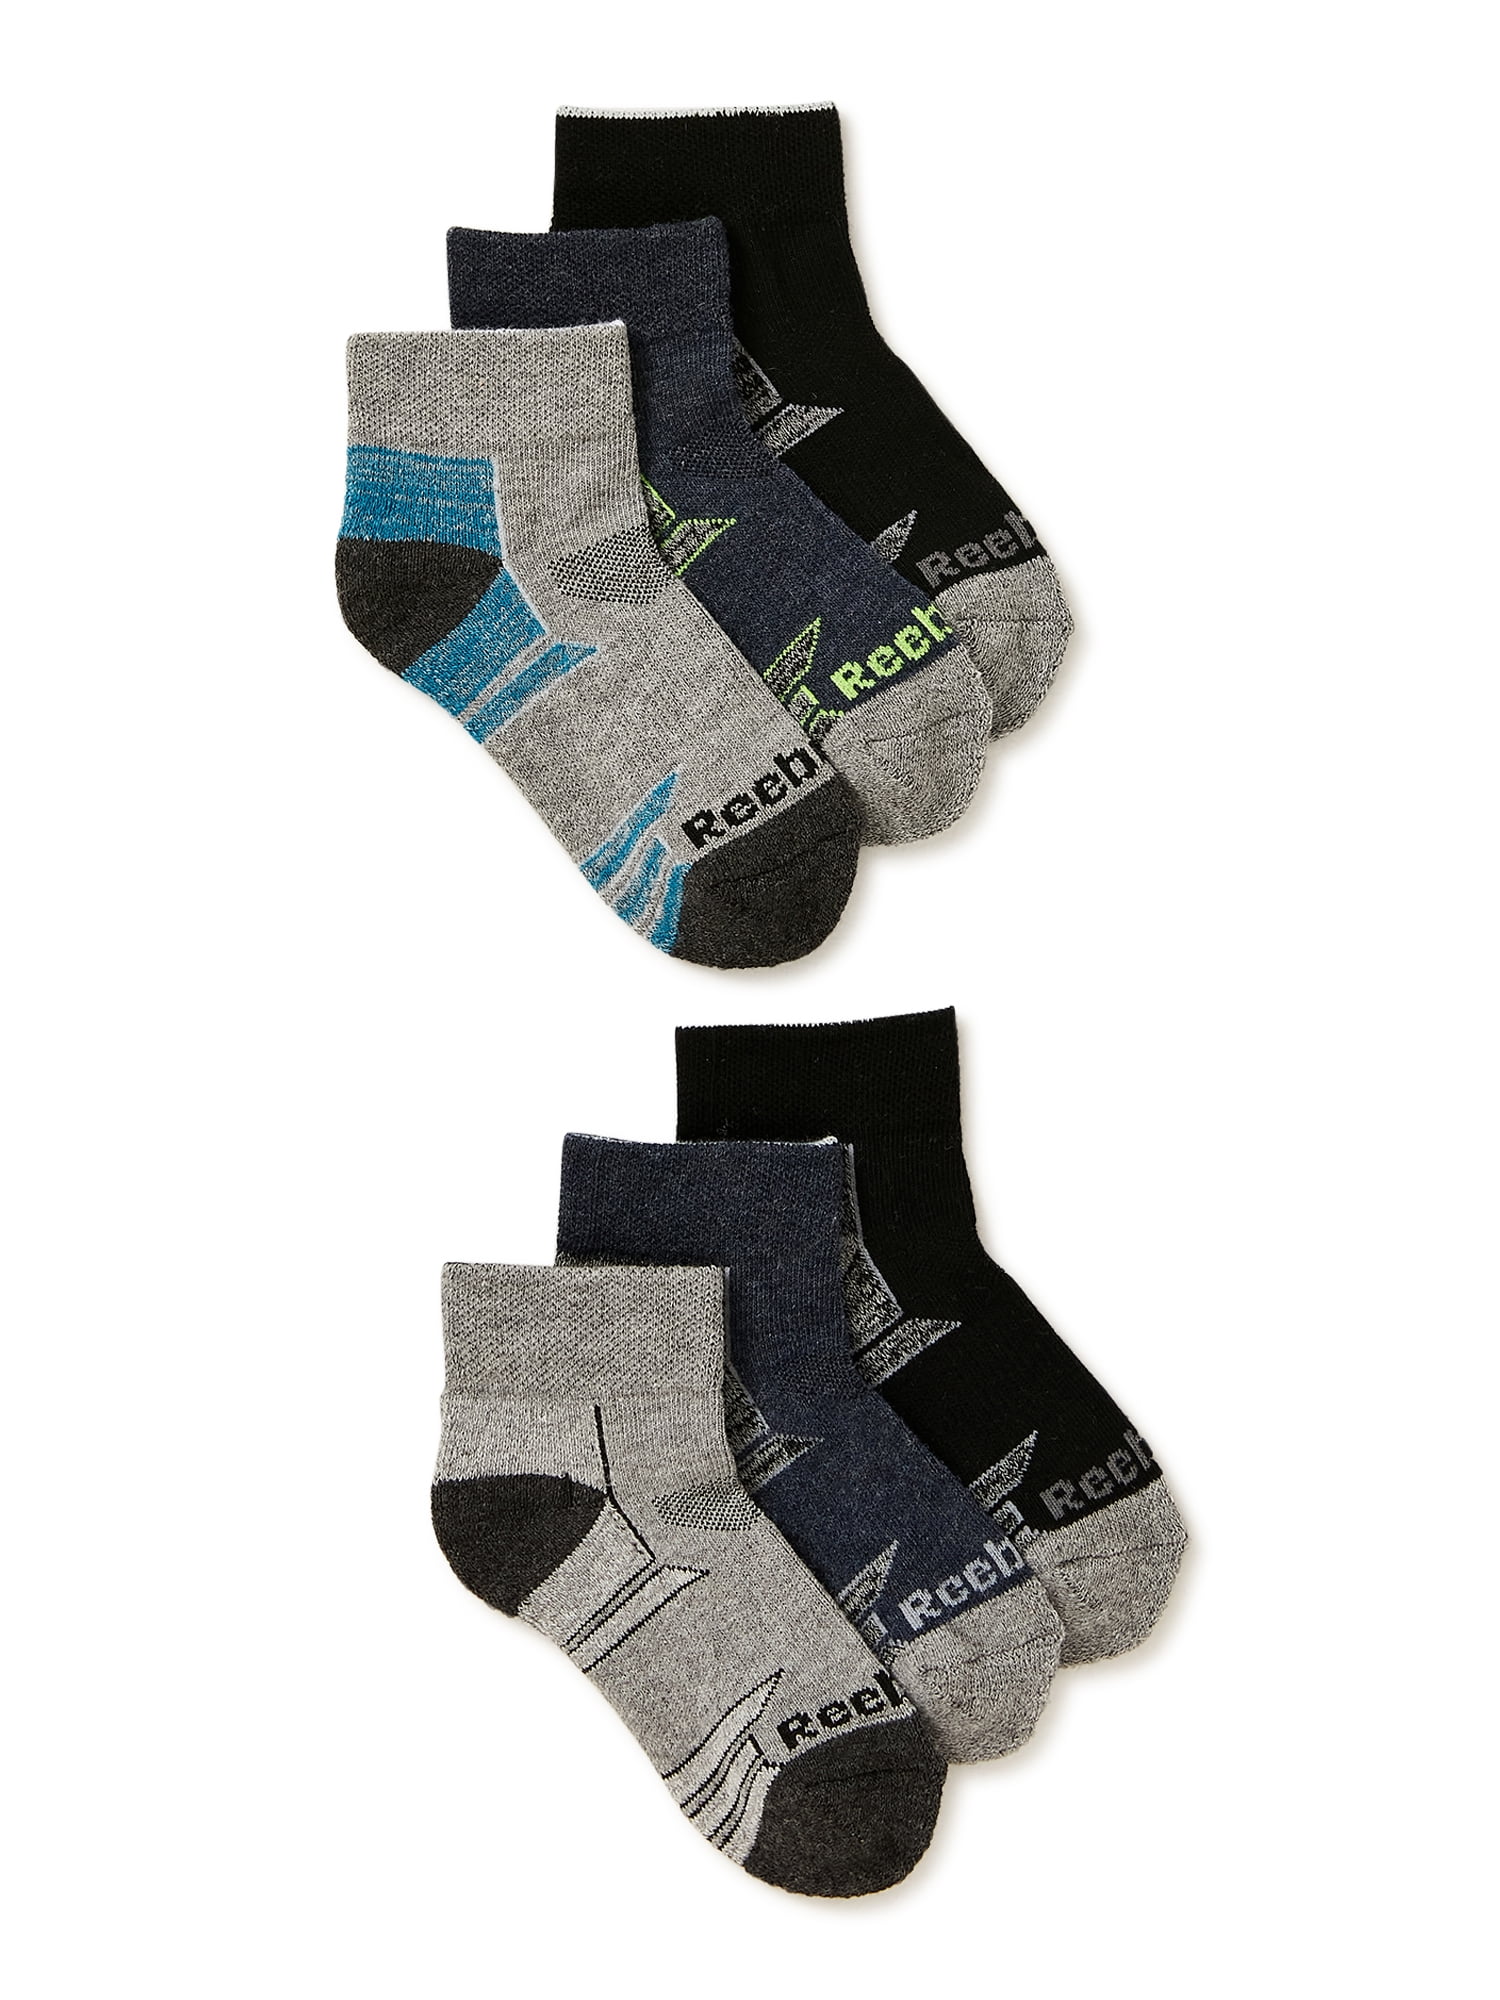 K.Bell Kids Boys' Quarter Socks 12 Pairs 8668-5 L Multicolor Assorted